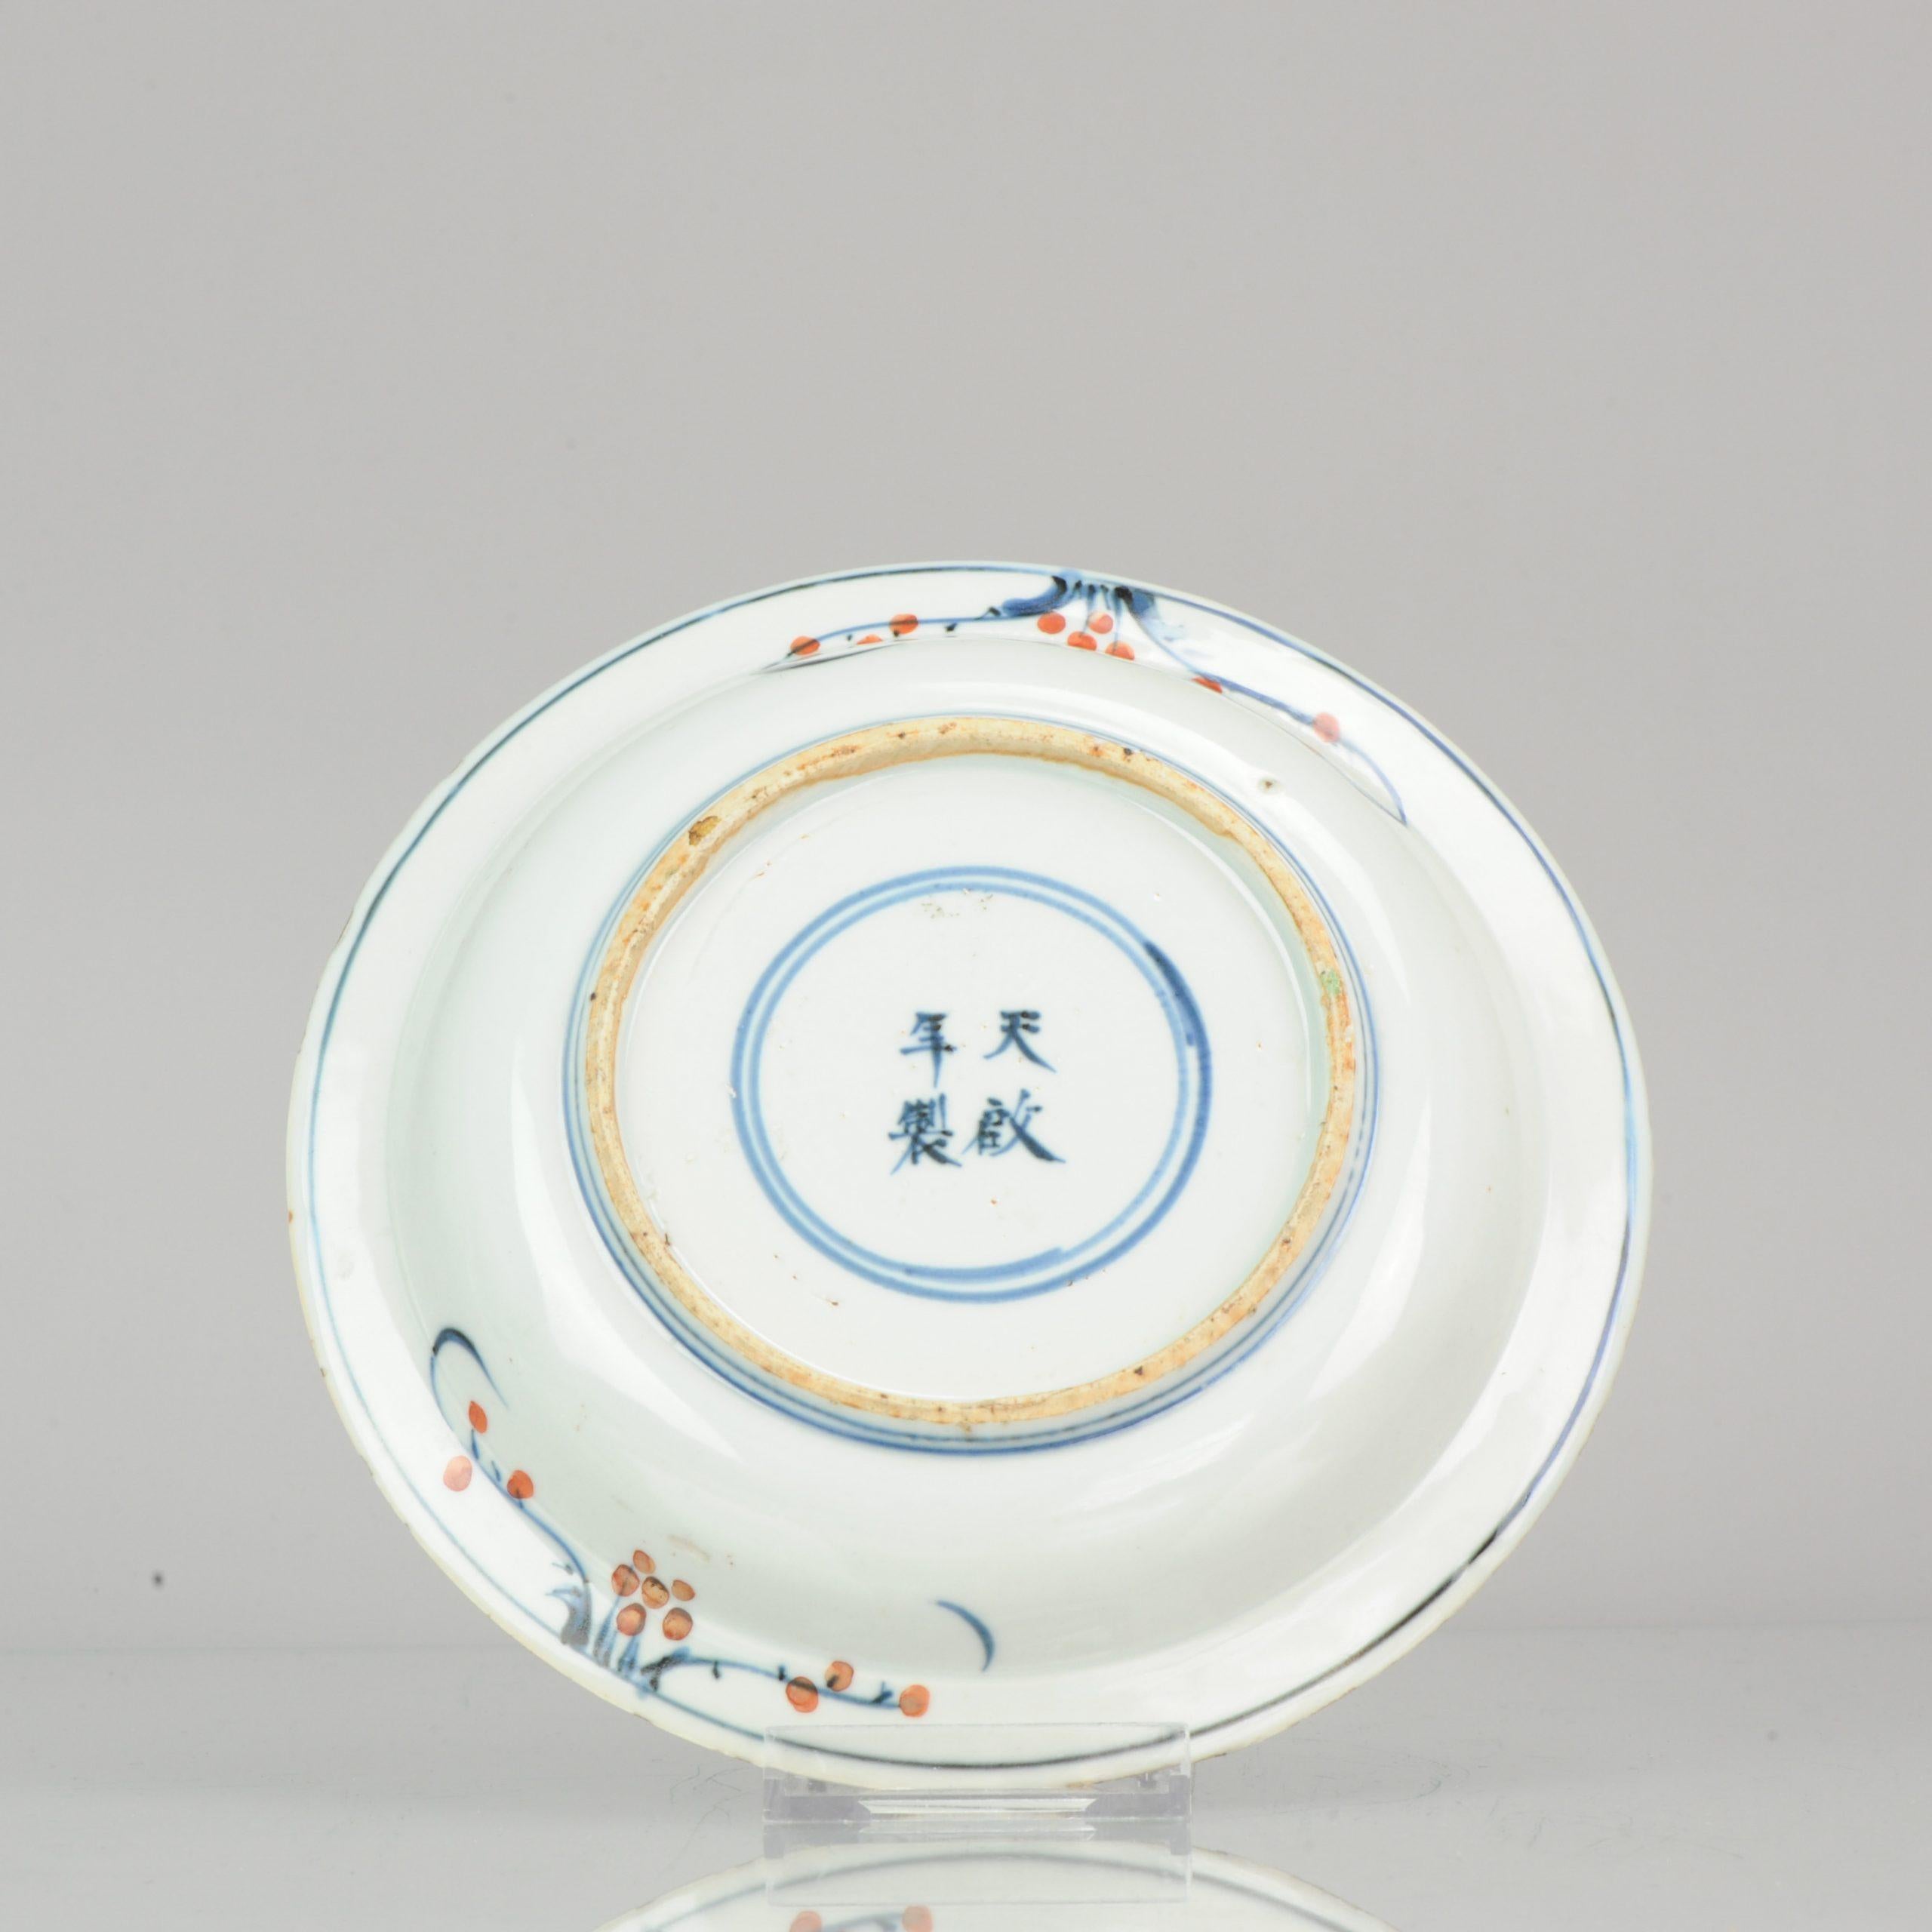 Kosometsuke Antique Chinese 17th Century Tianqi Mark En Period Plate, China 4